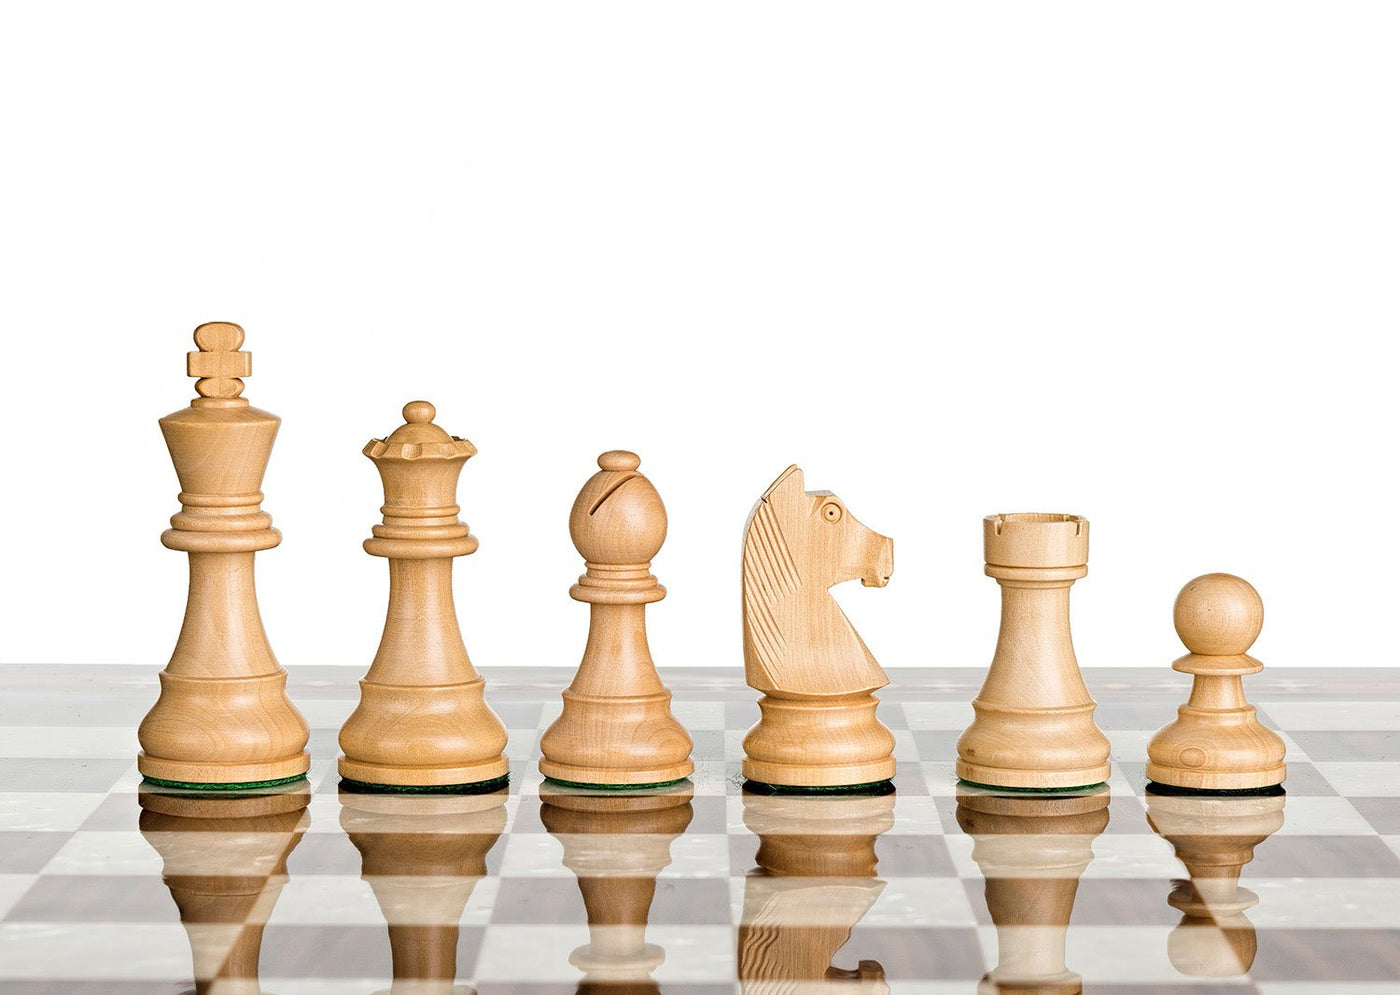 Queens Gambit Series Complete Chess Set Boxwood & Ebony 